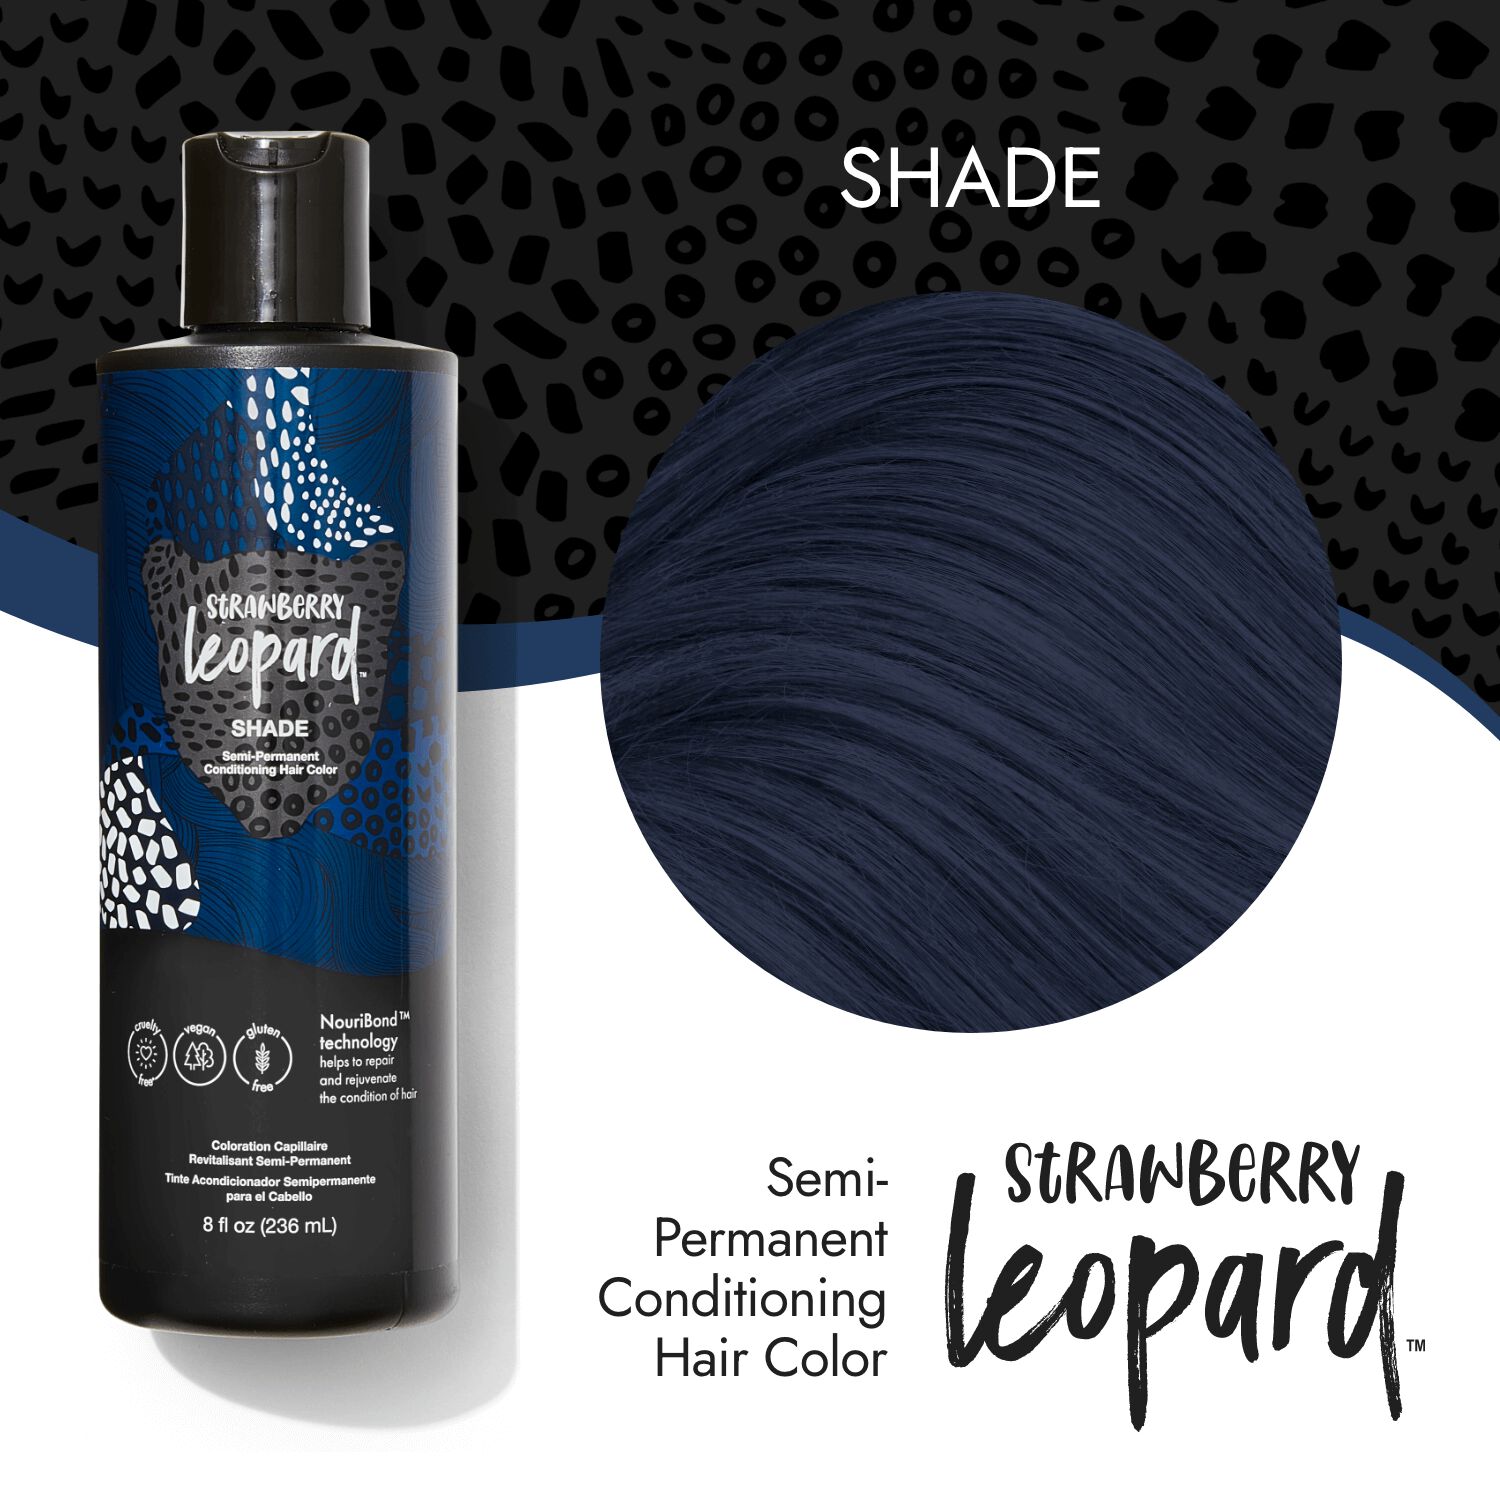 Strawberry Leopard Shade Semi Permanent Conditioning Hair Color | Semi